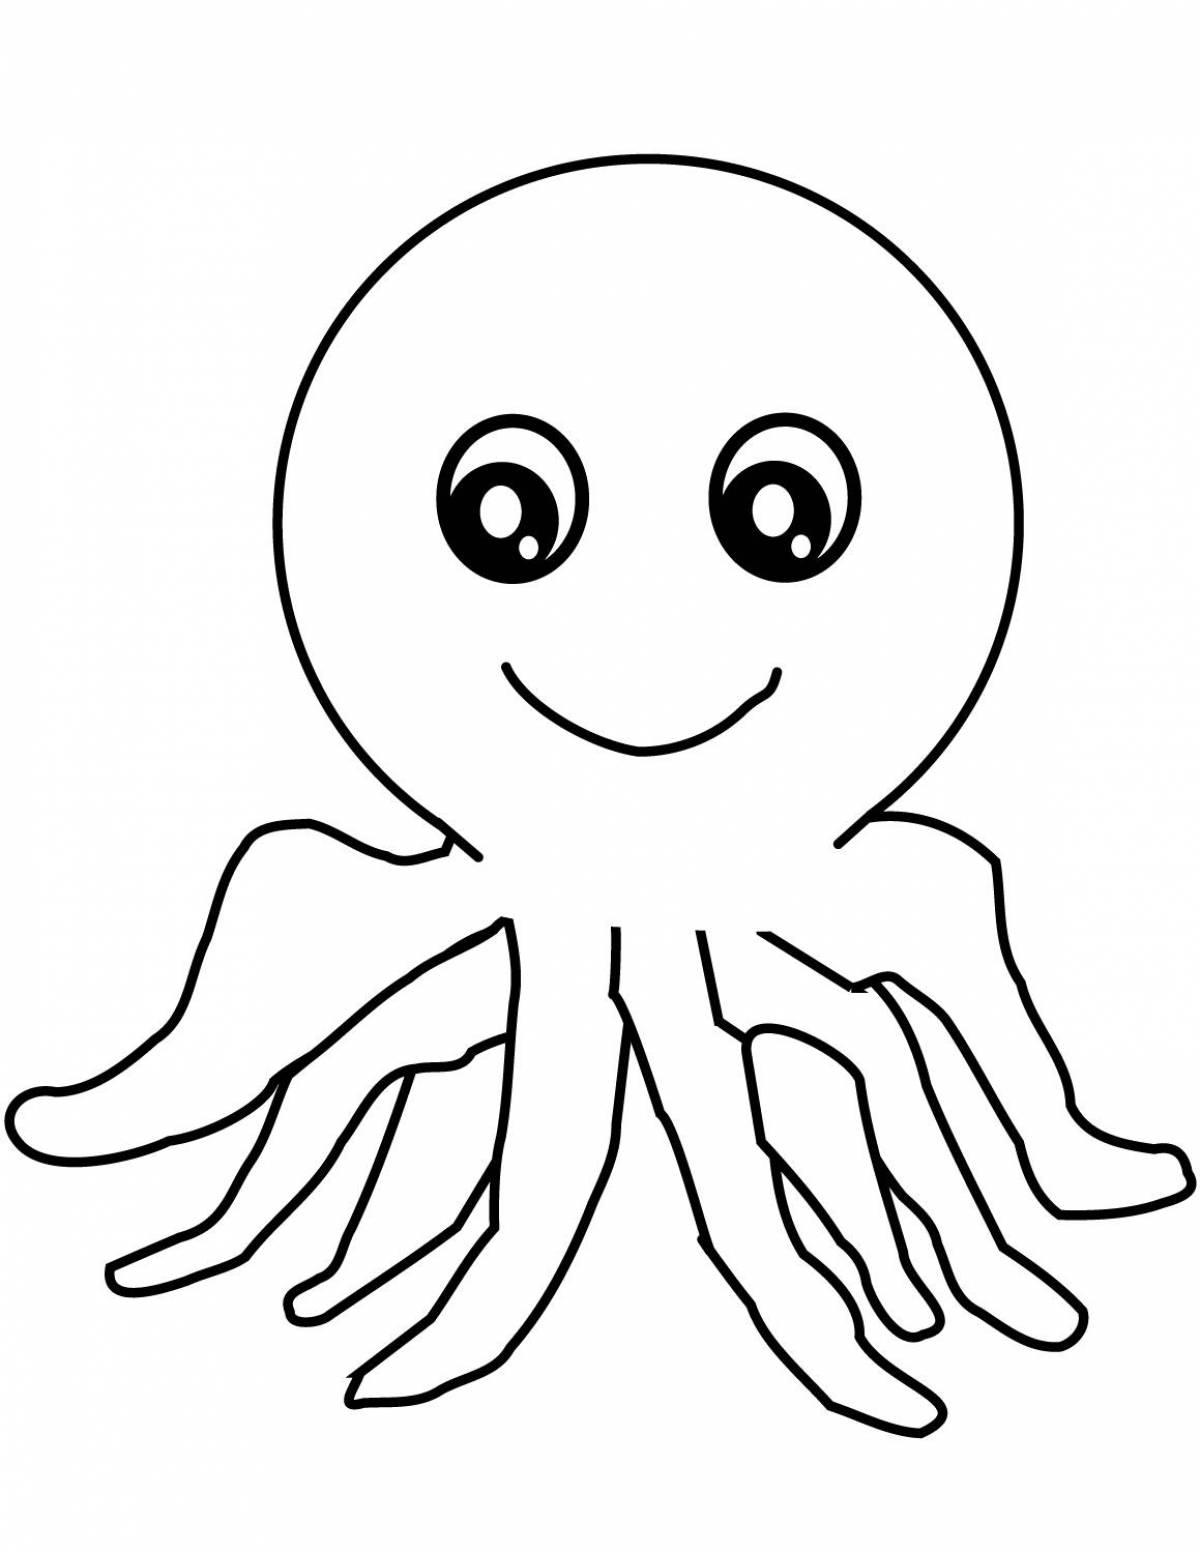 Magic octopus coloring book for kids